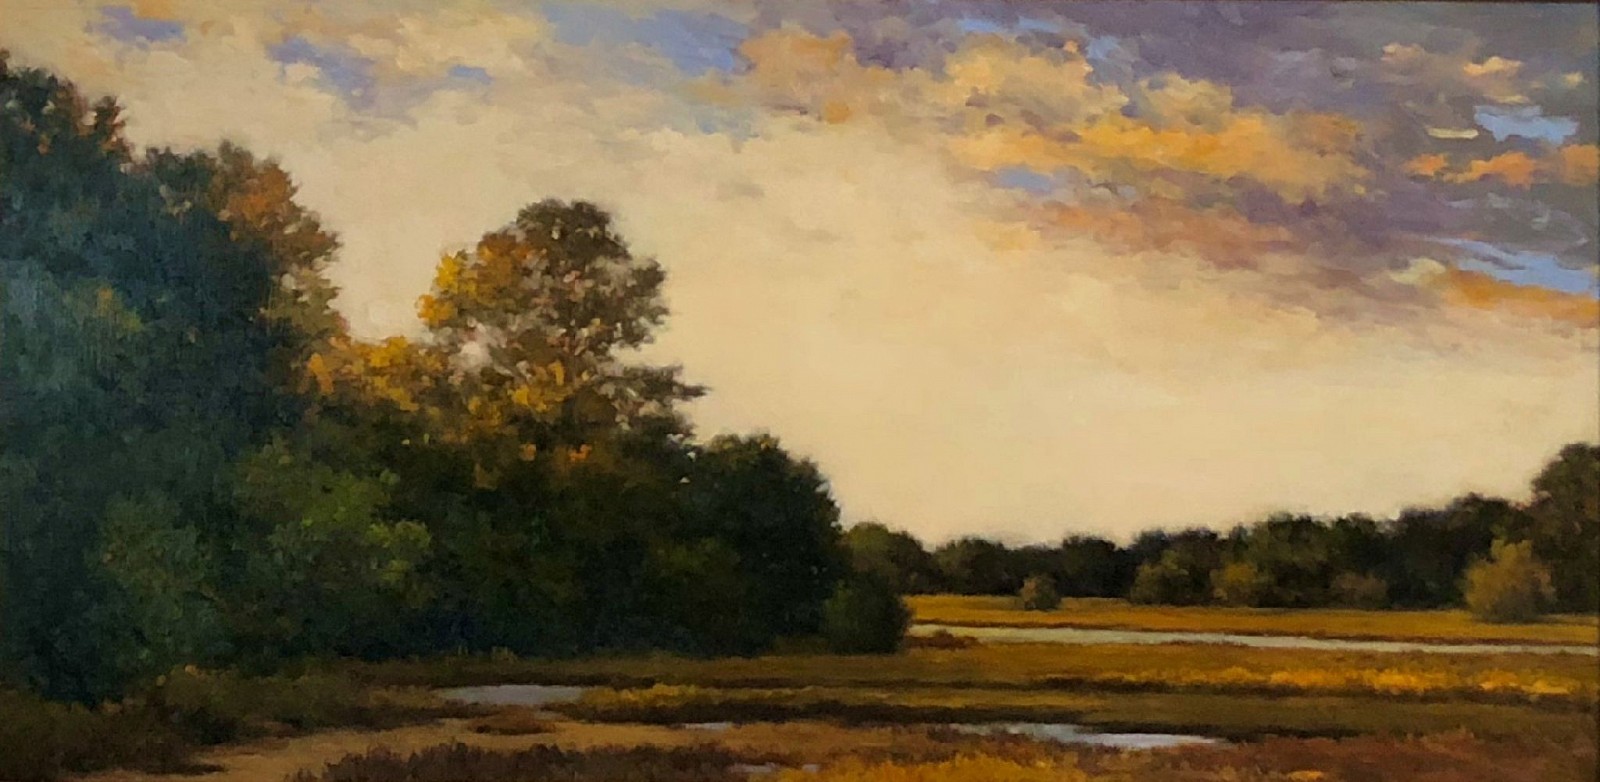 David Peikon, Evening on the Marsh, 2017
oil on panel, 12 x 24 in. (30.5 x 61 cm)
DP200128